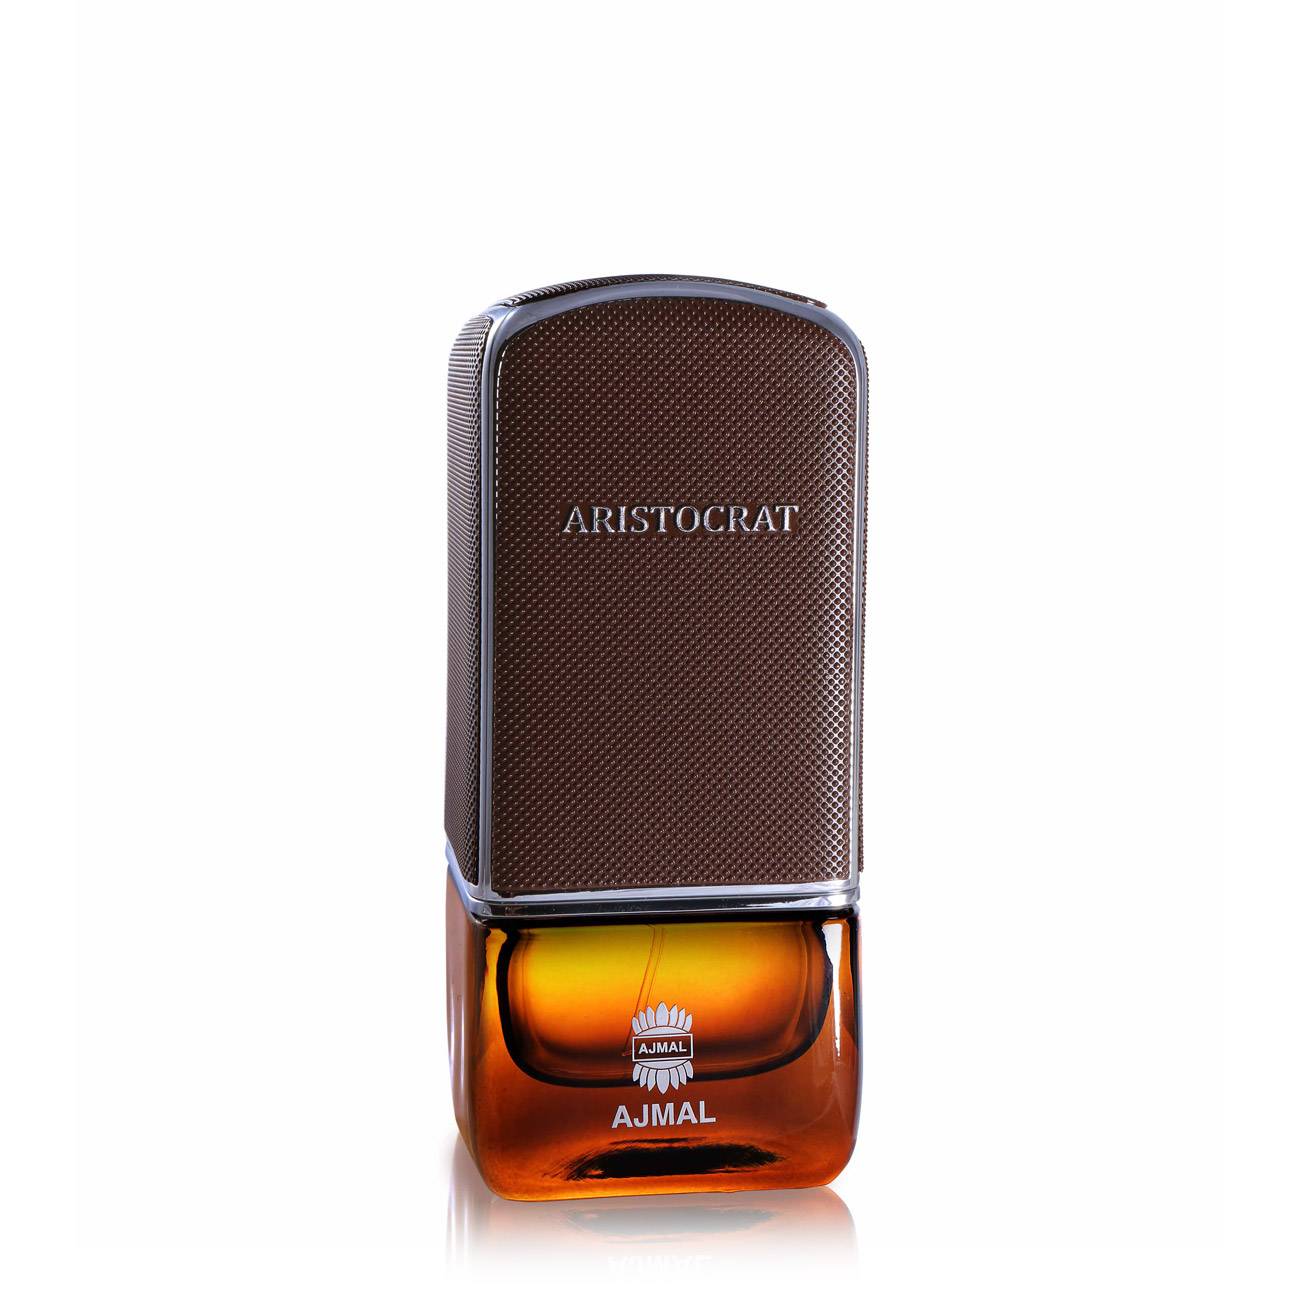 Apa de Parfum Ajmal ARISTOCRAT 75ml cu comanda online